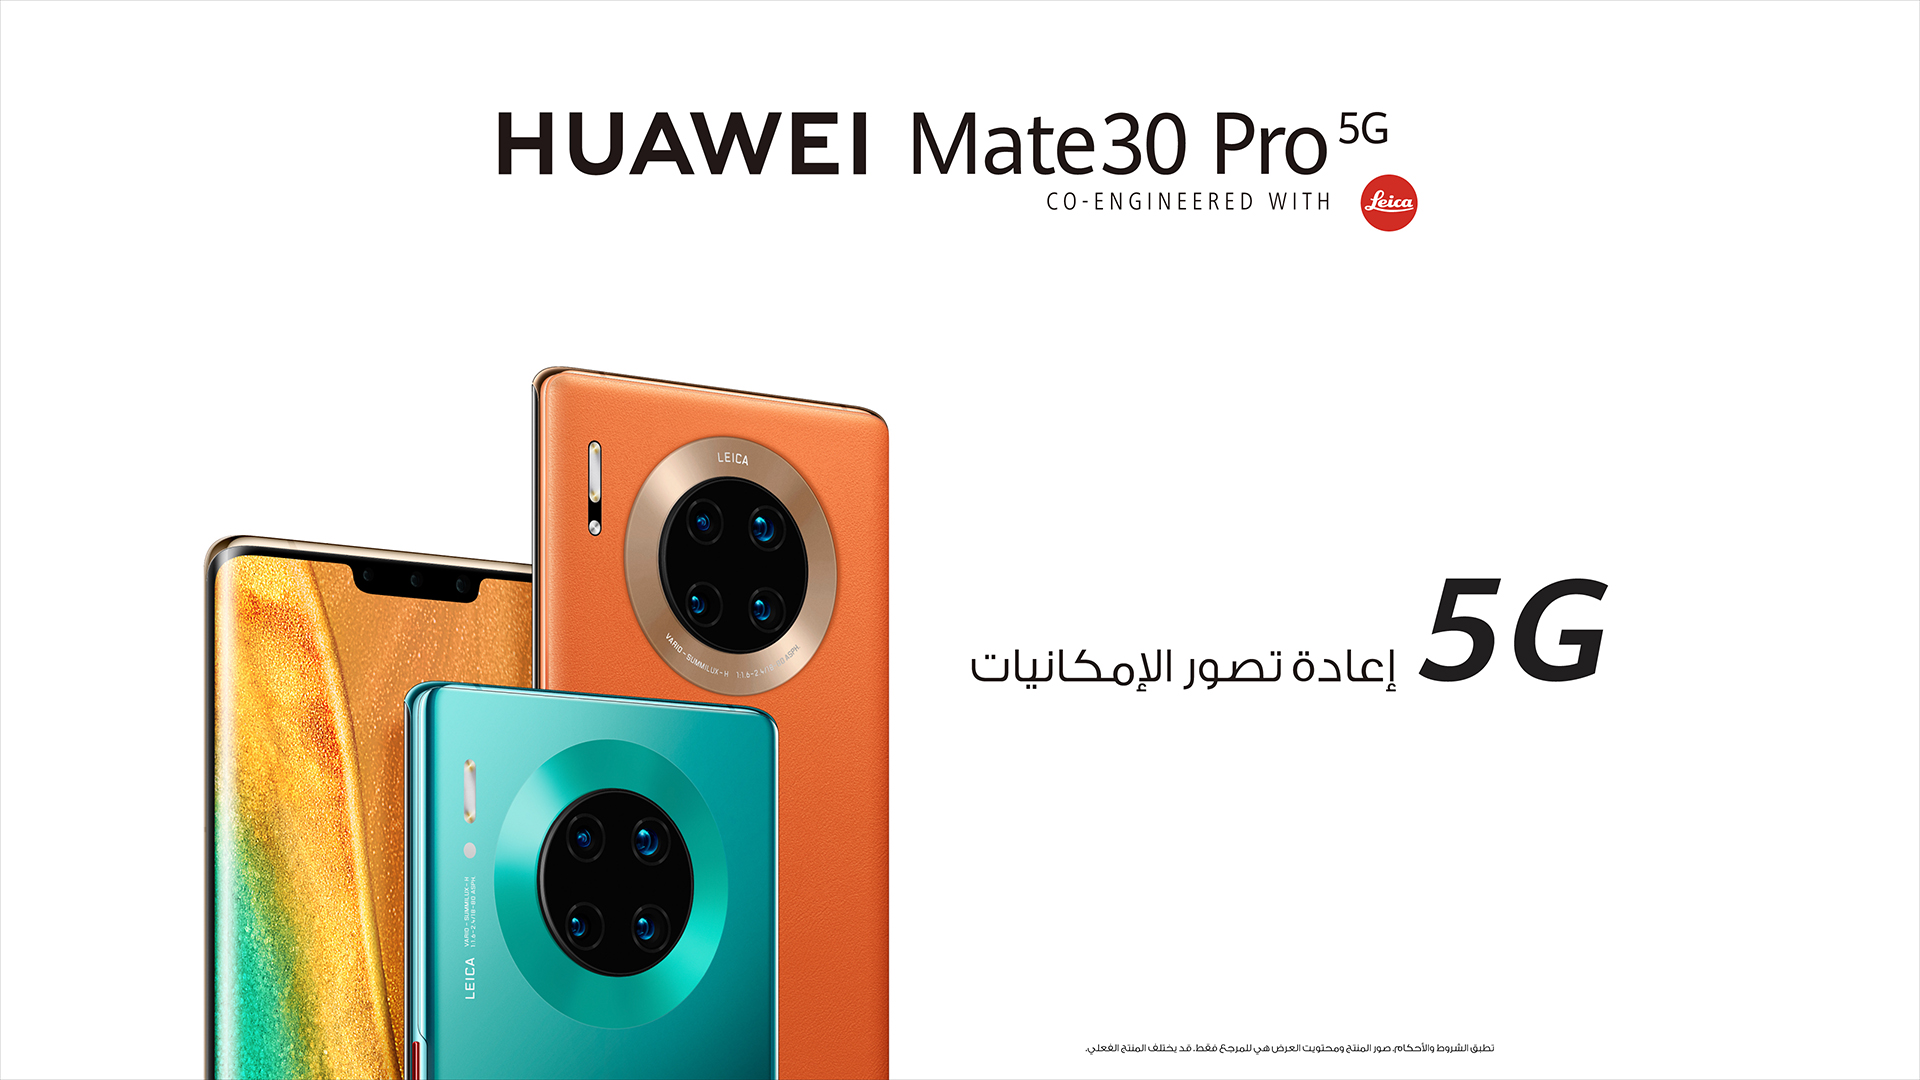 HUAWEI Mate 30 Pro 5G